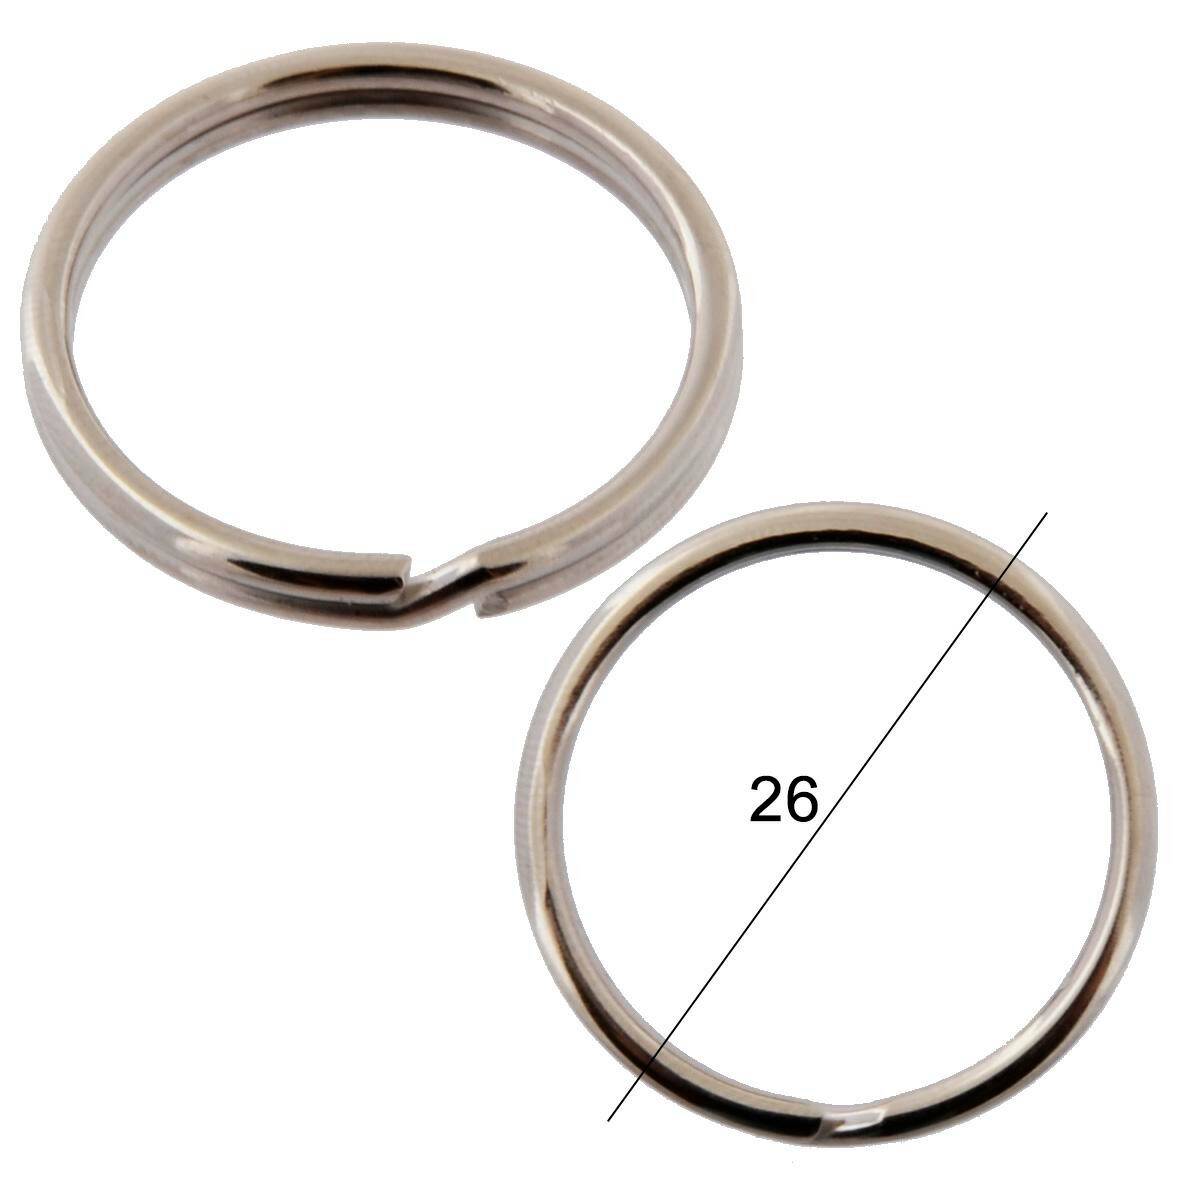 Key rings standard - diameter 26mm